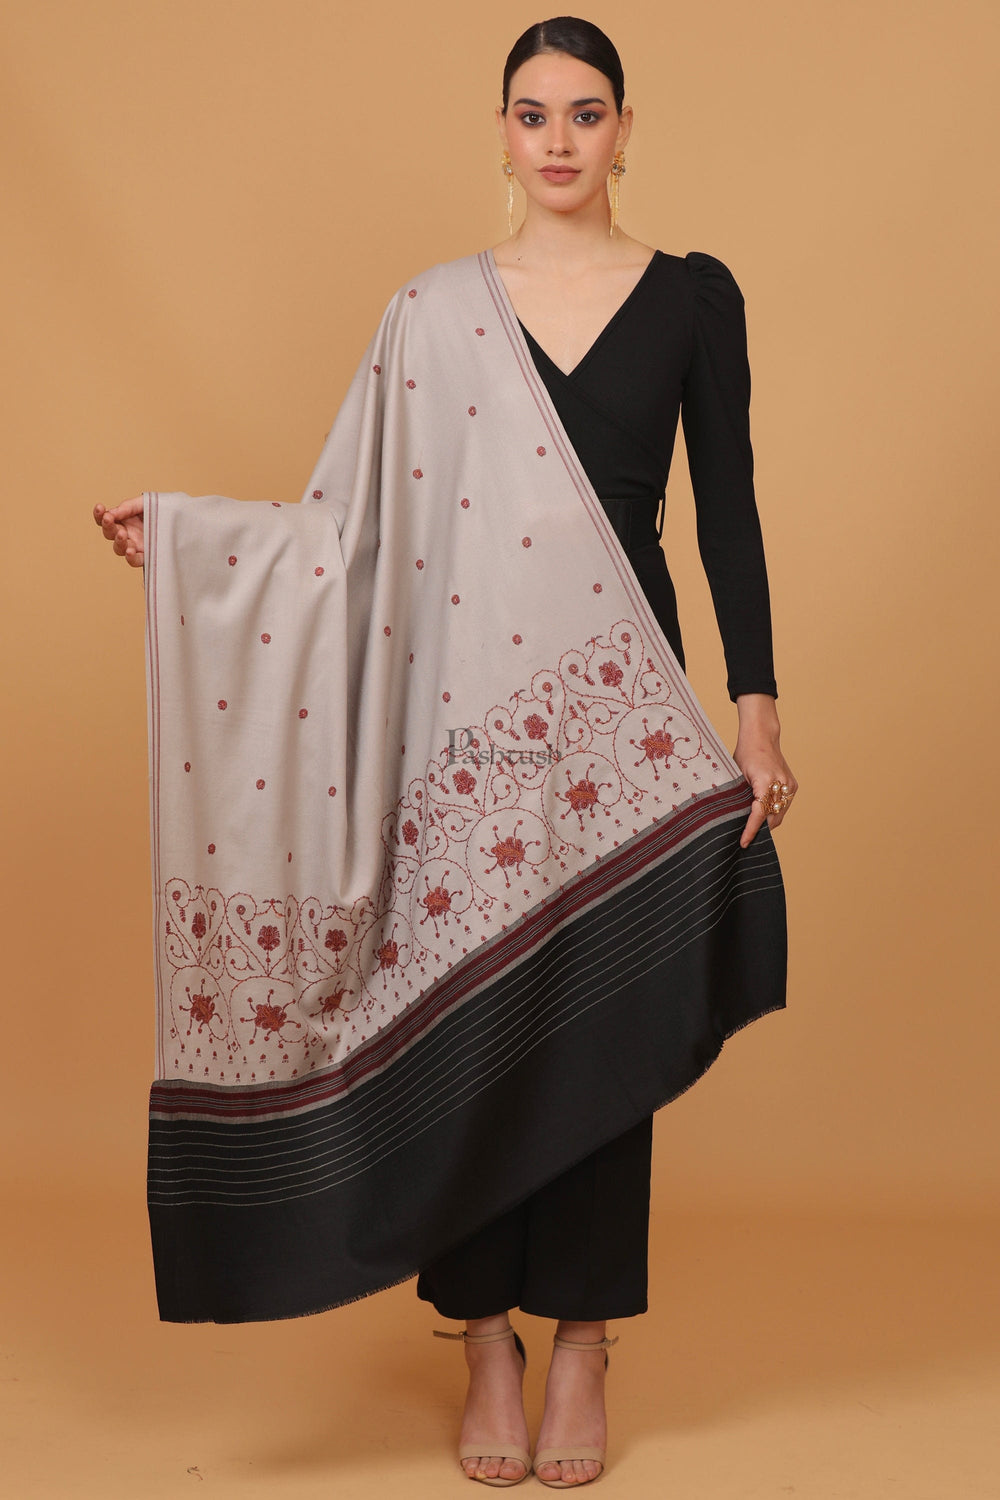 Pashtush India Womens Stoles and Scarves Scarf Pashtush womens Fine Wool shawl, kashmiri embroidery design, Dark Grey